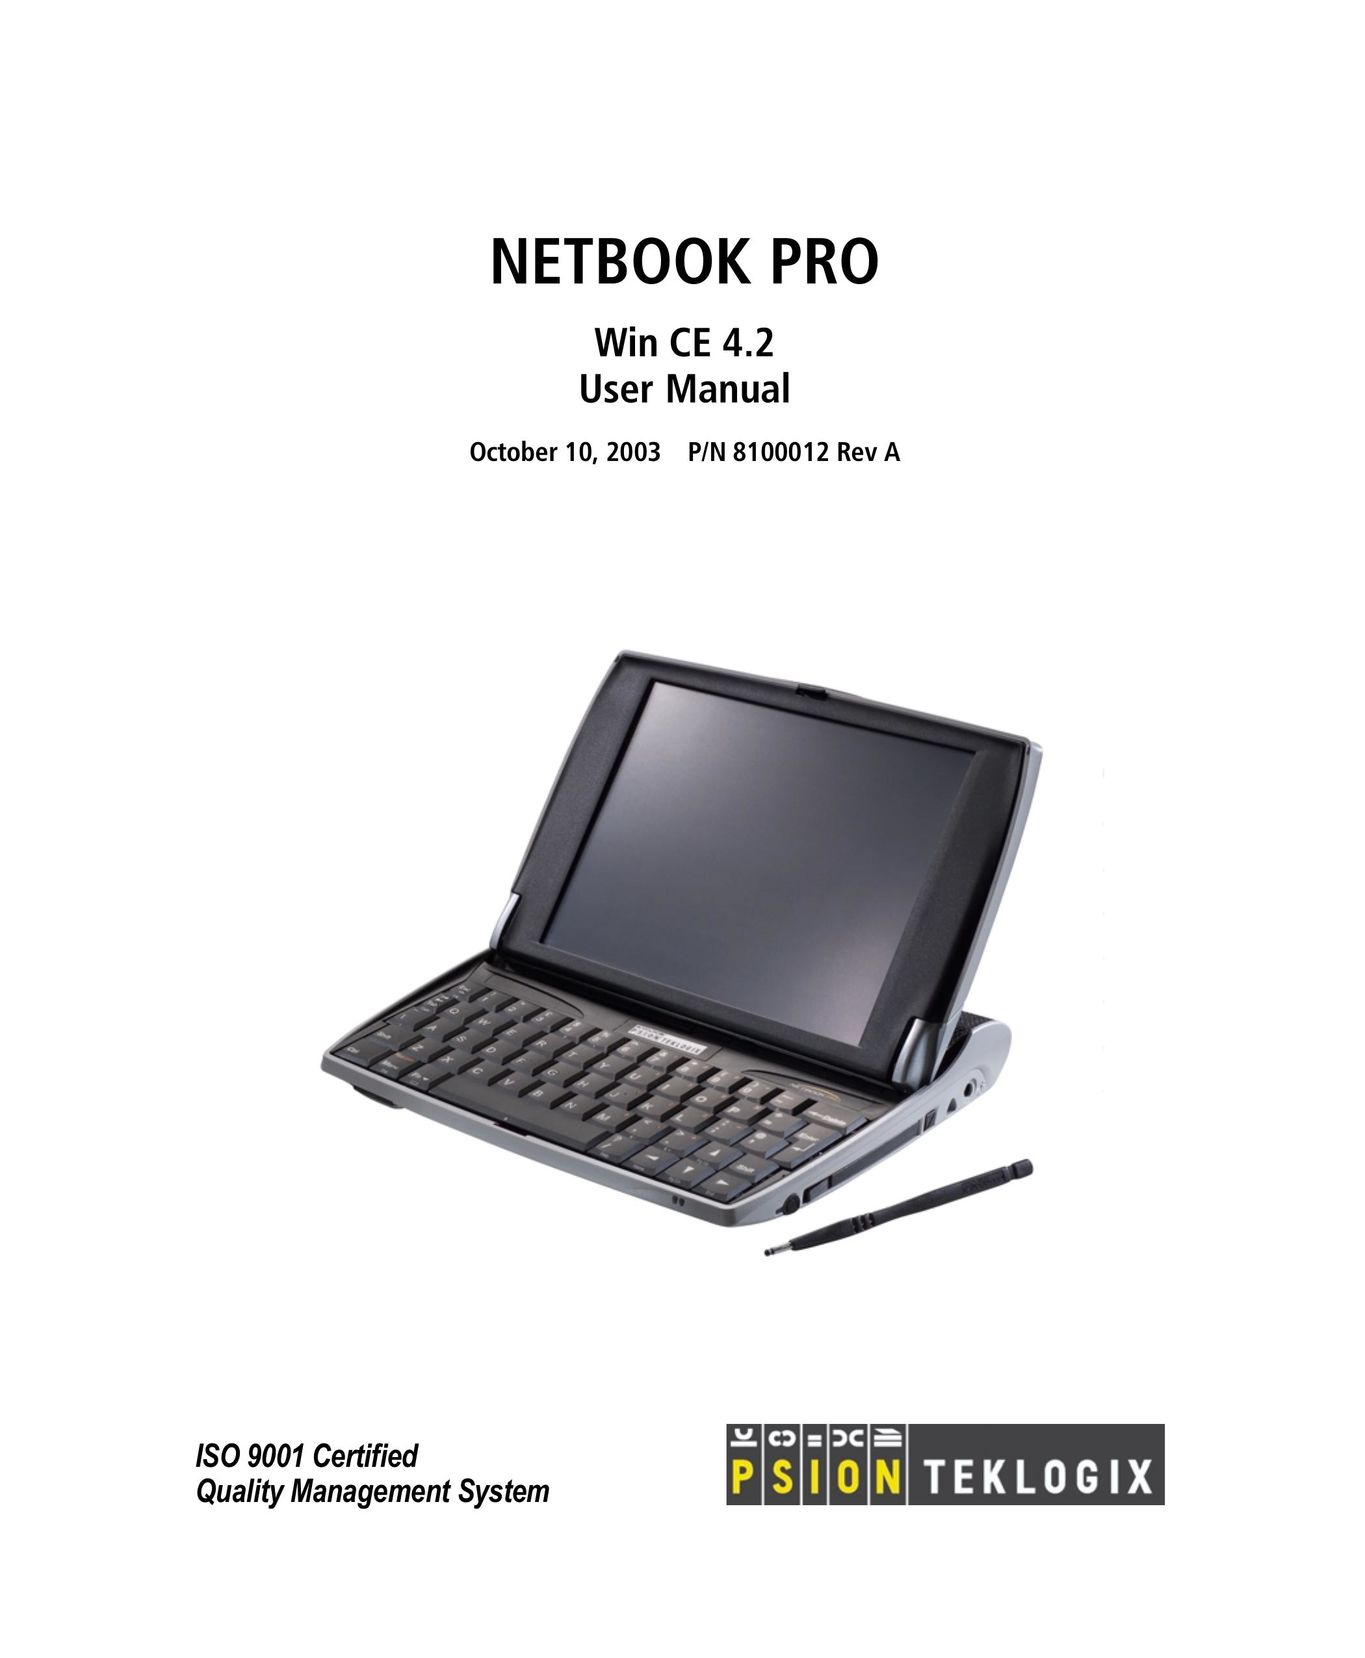 Psion Teklogix Win CE 4.2 Laptop User Manual